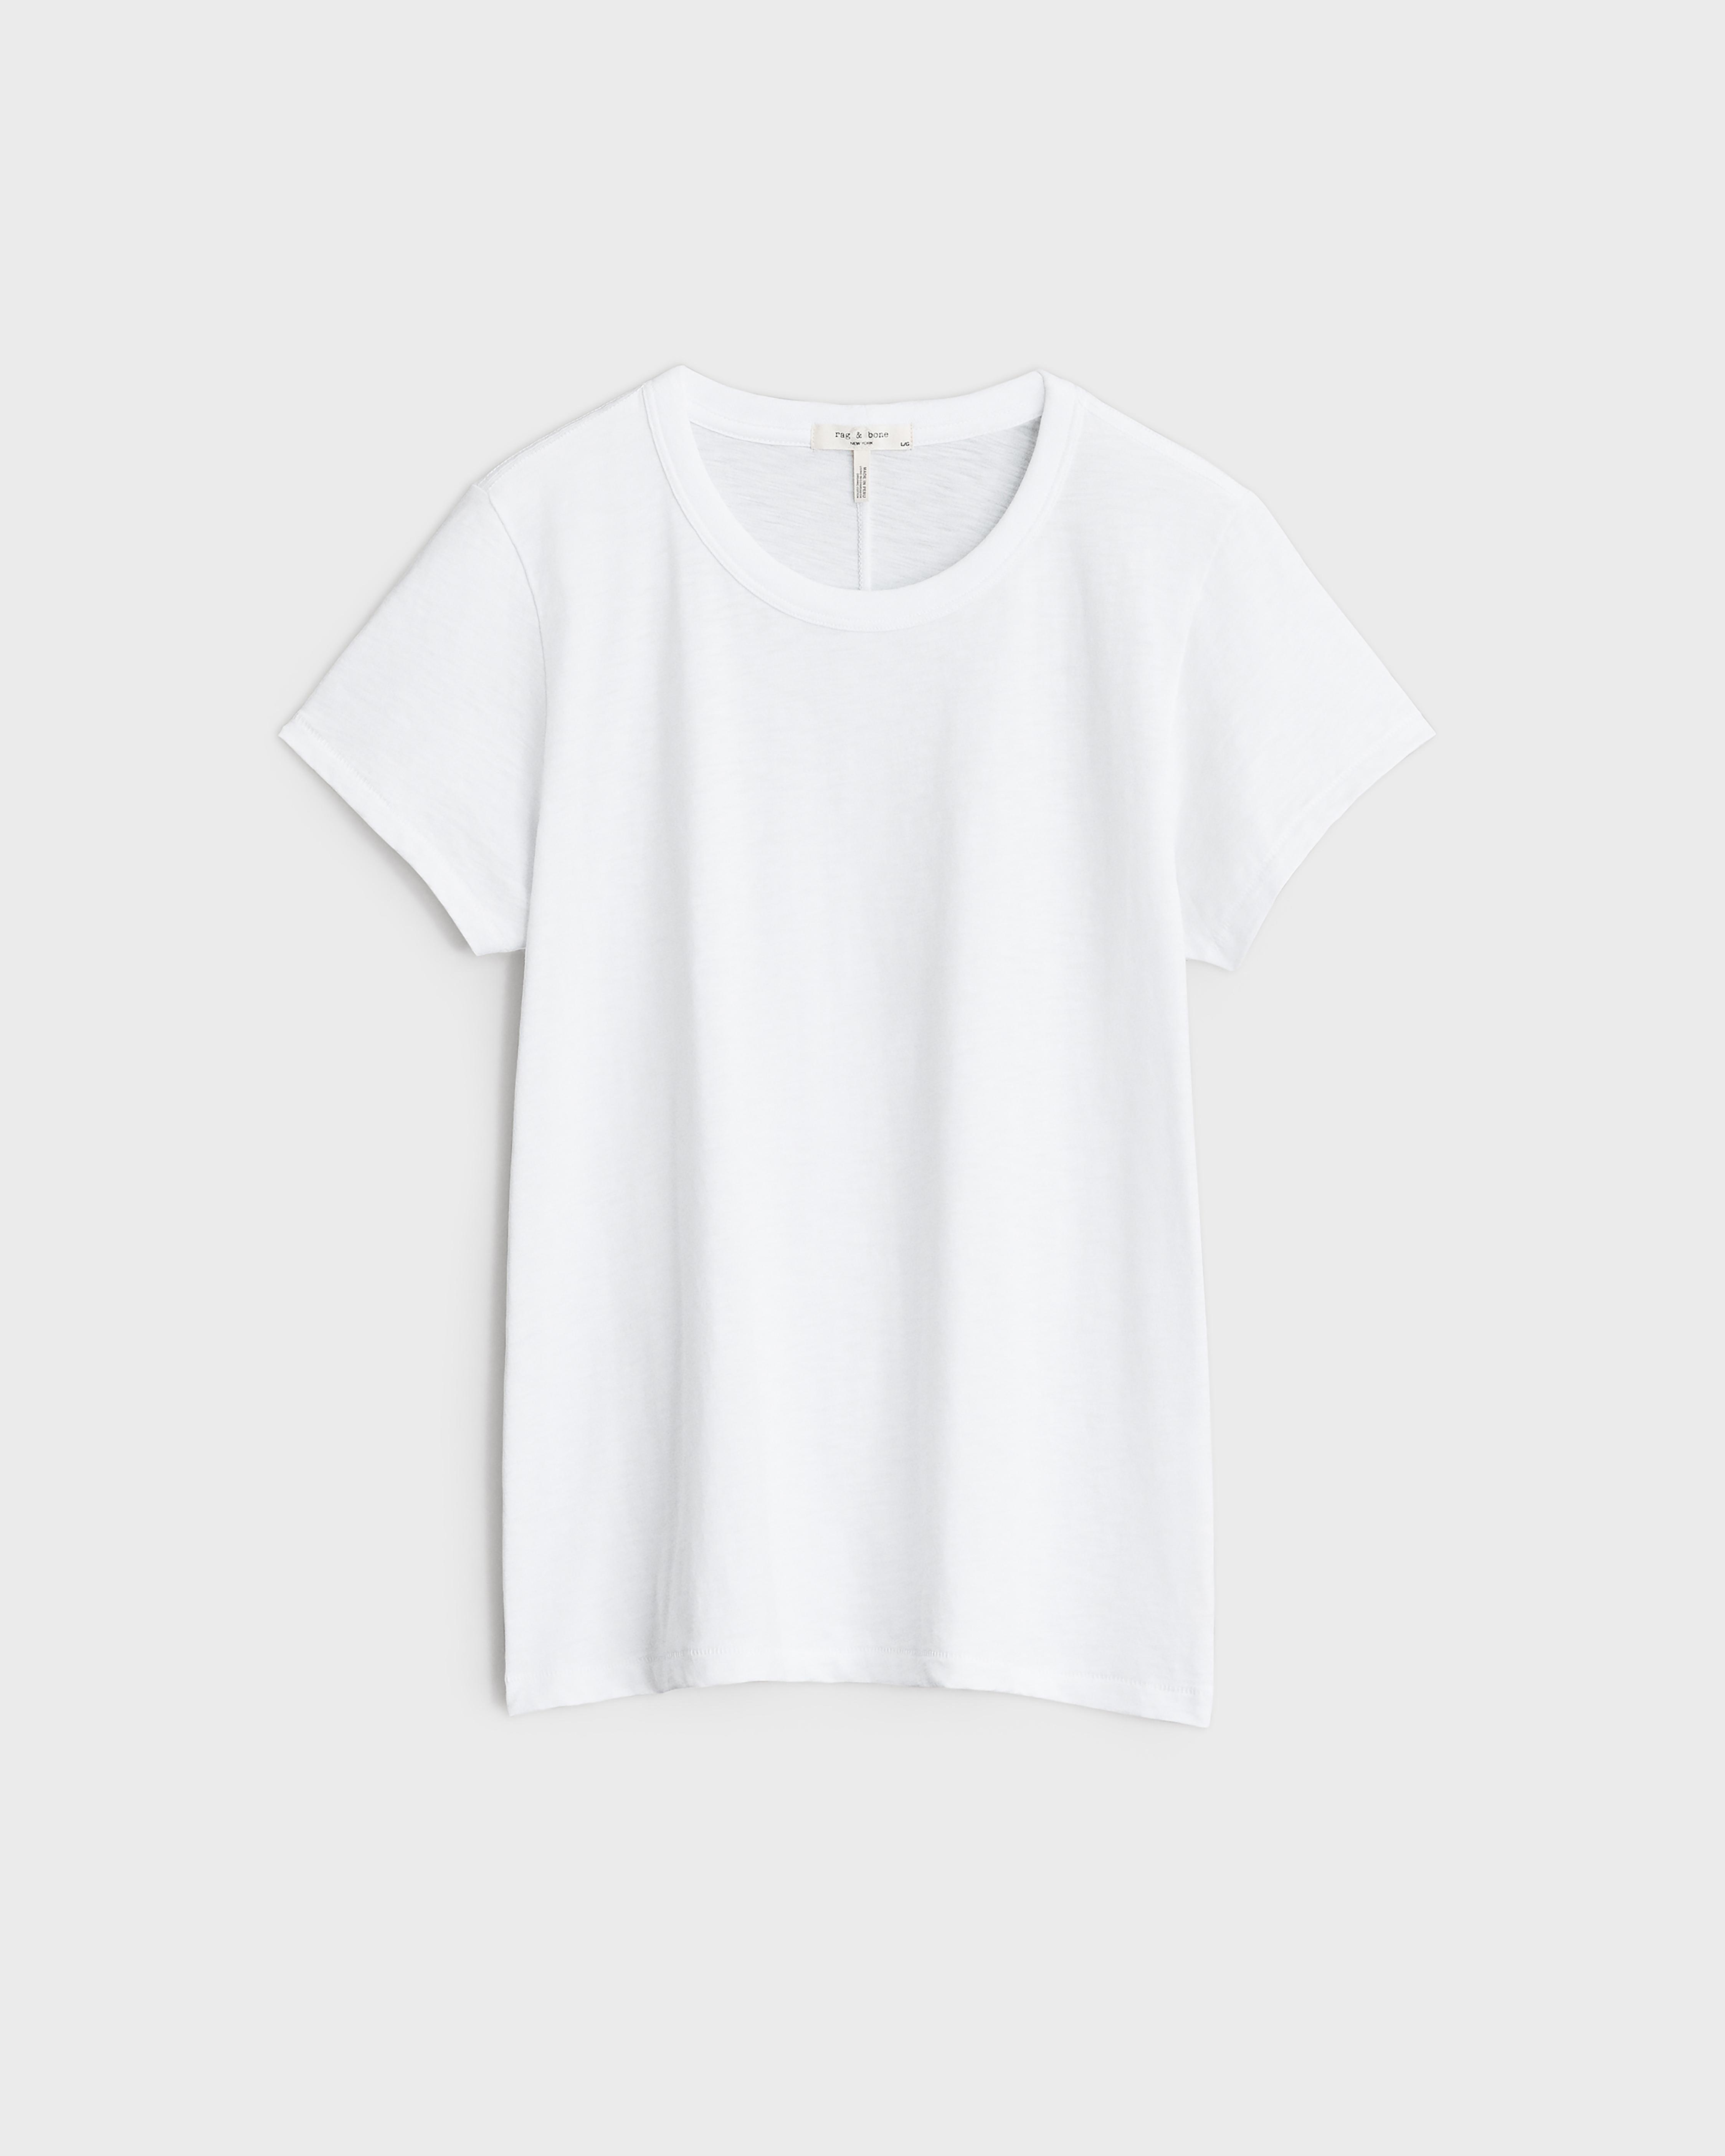 Blank Tshirts Half Sleeves at Rs 161/piece